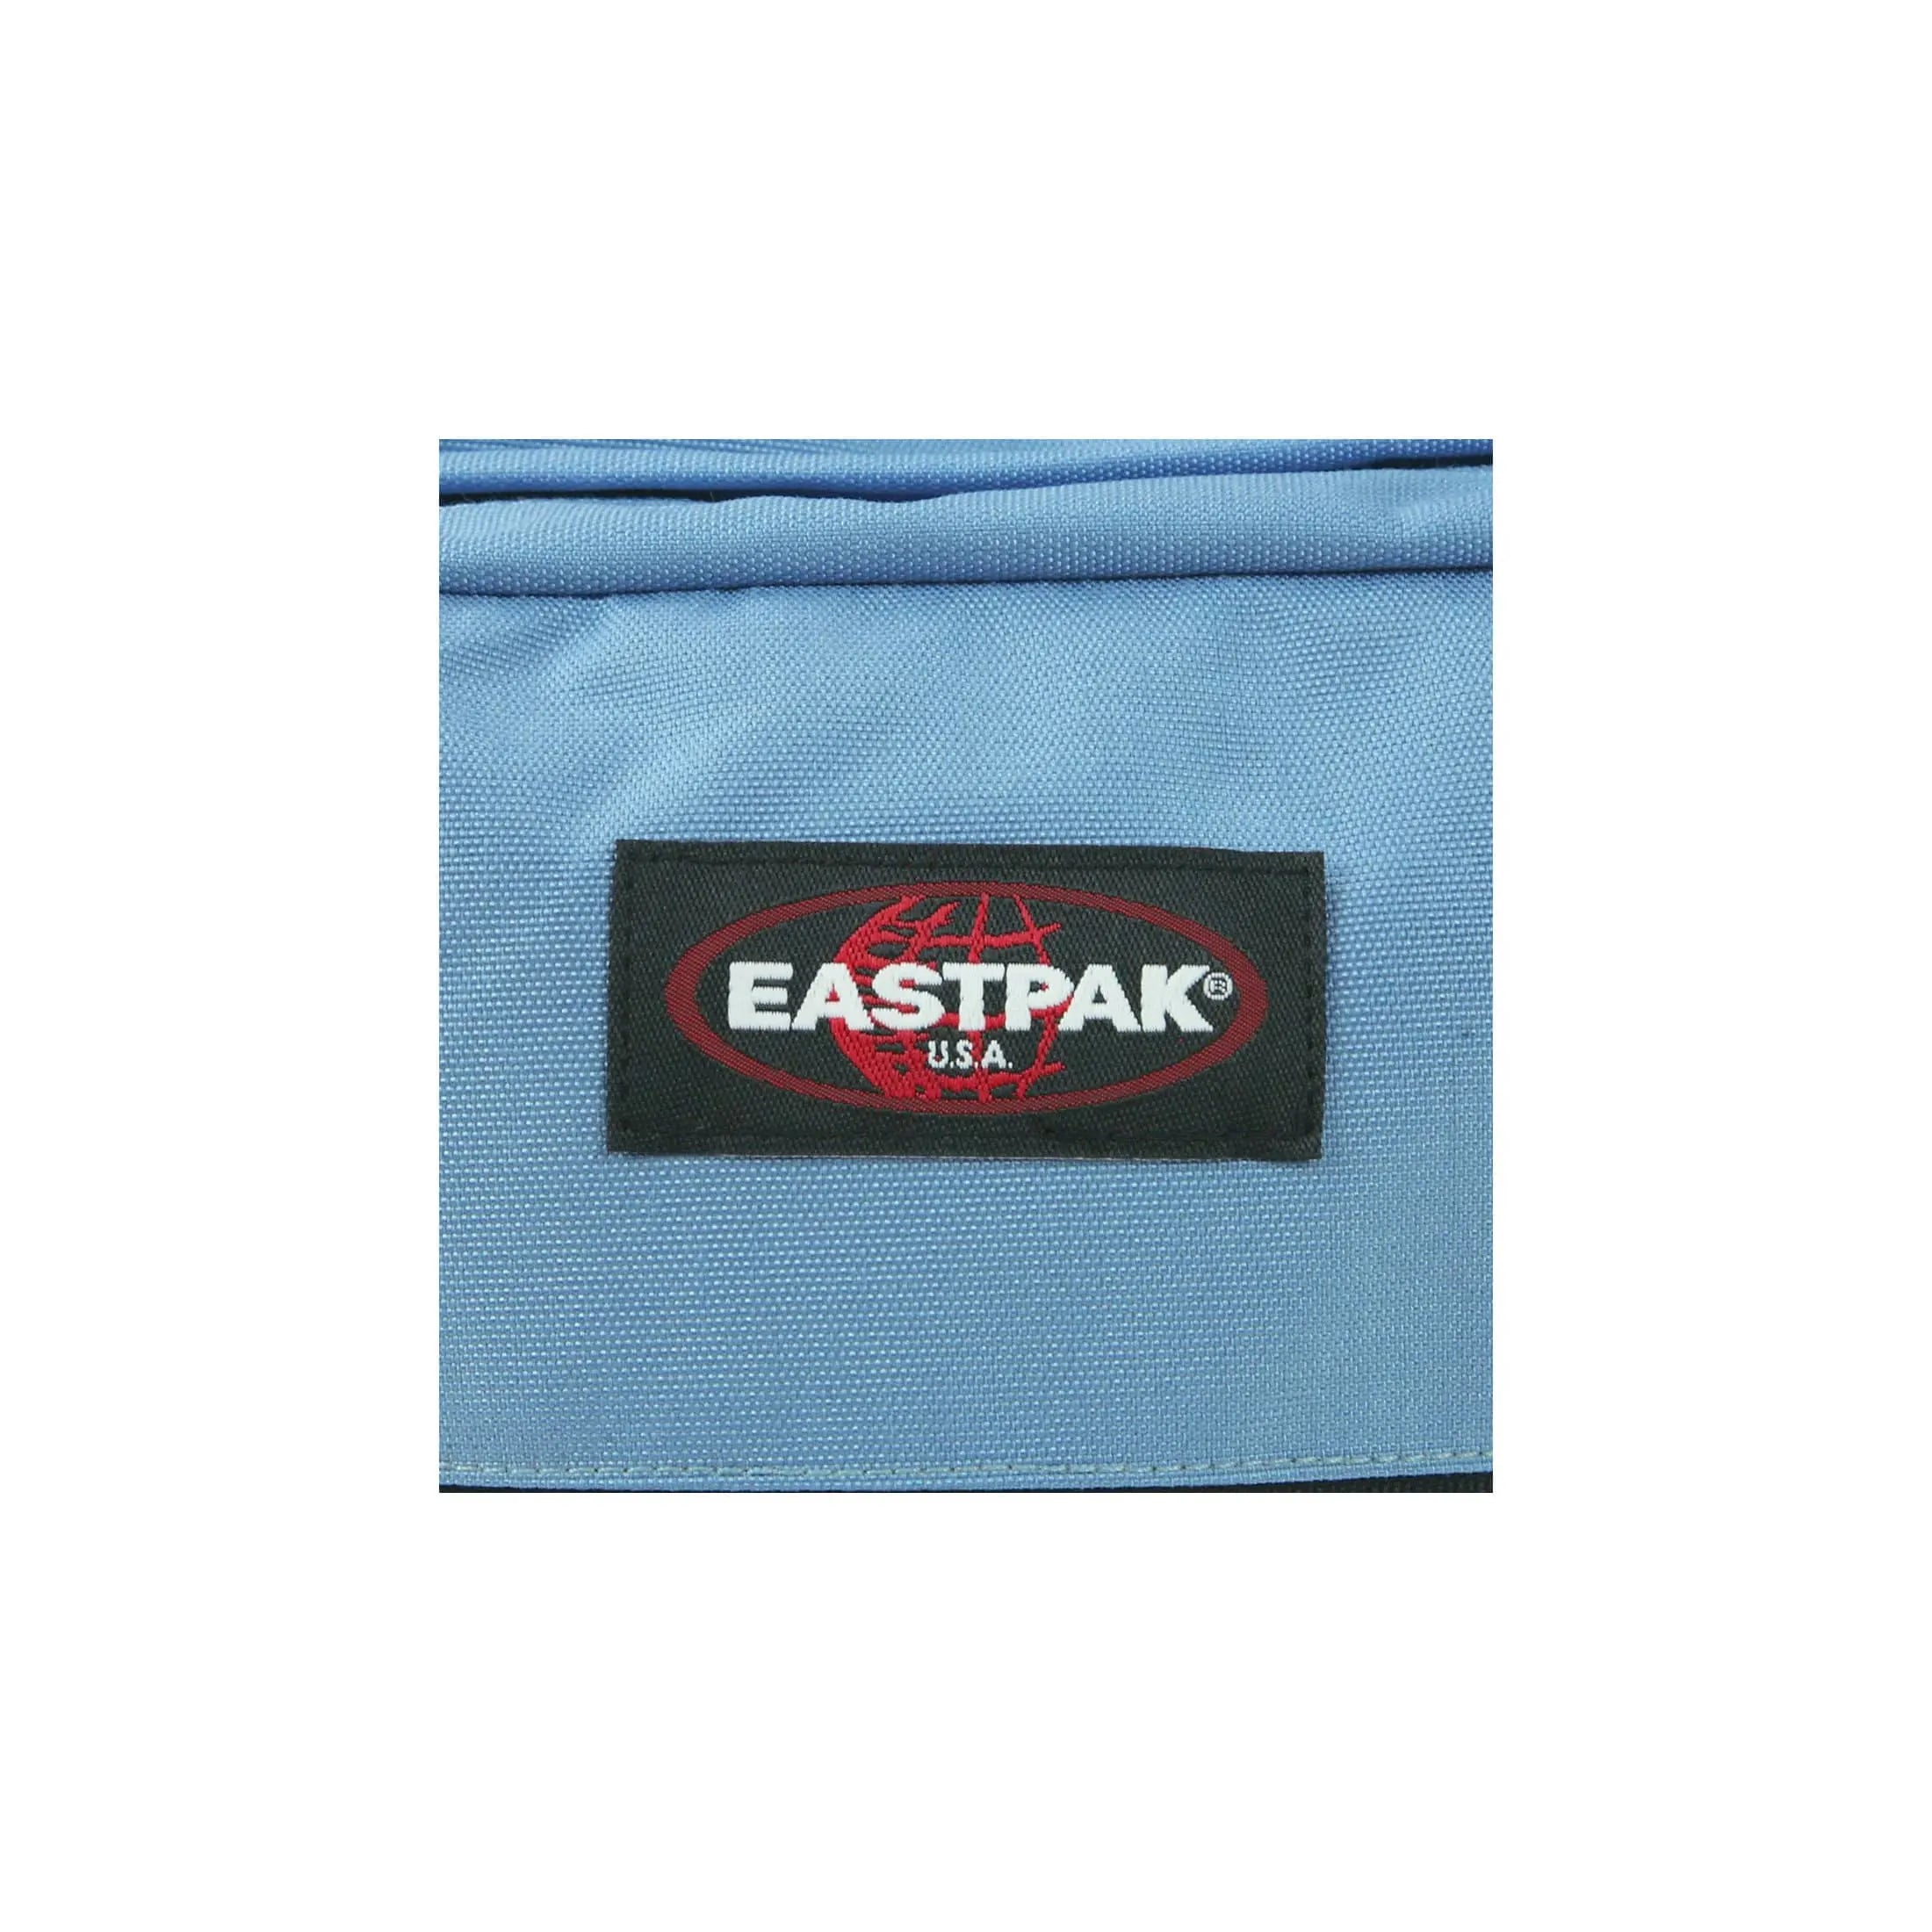 Eastpak Authentic Pinnacle Freizeitrucksack 42 cm - checksange blue